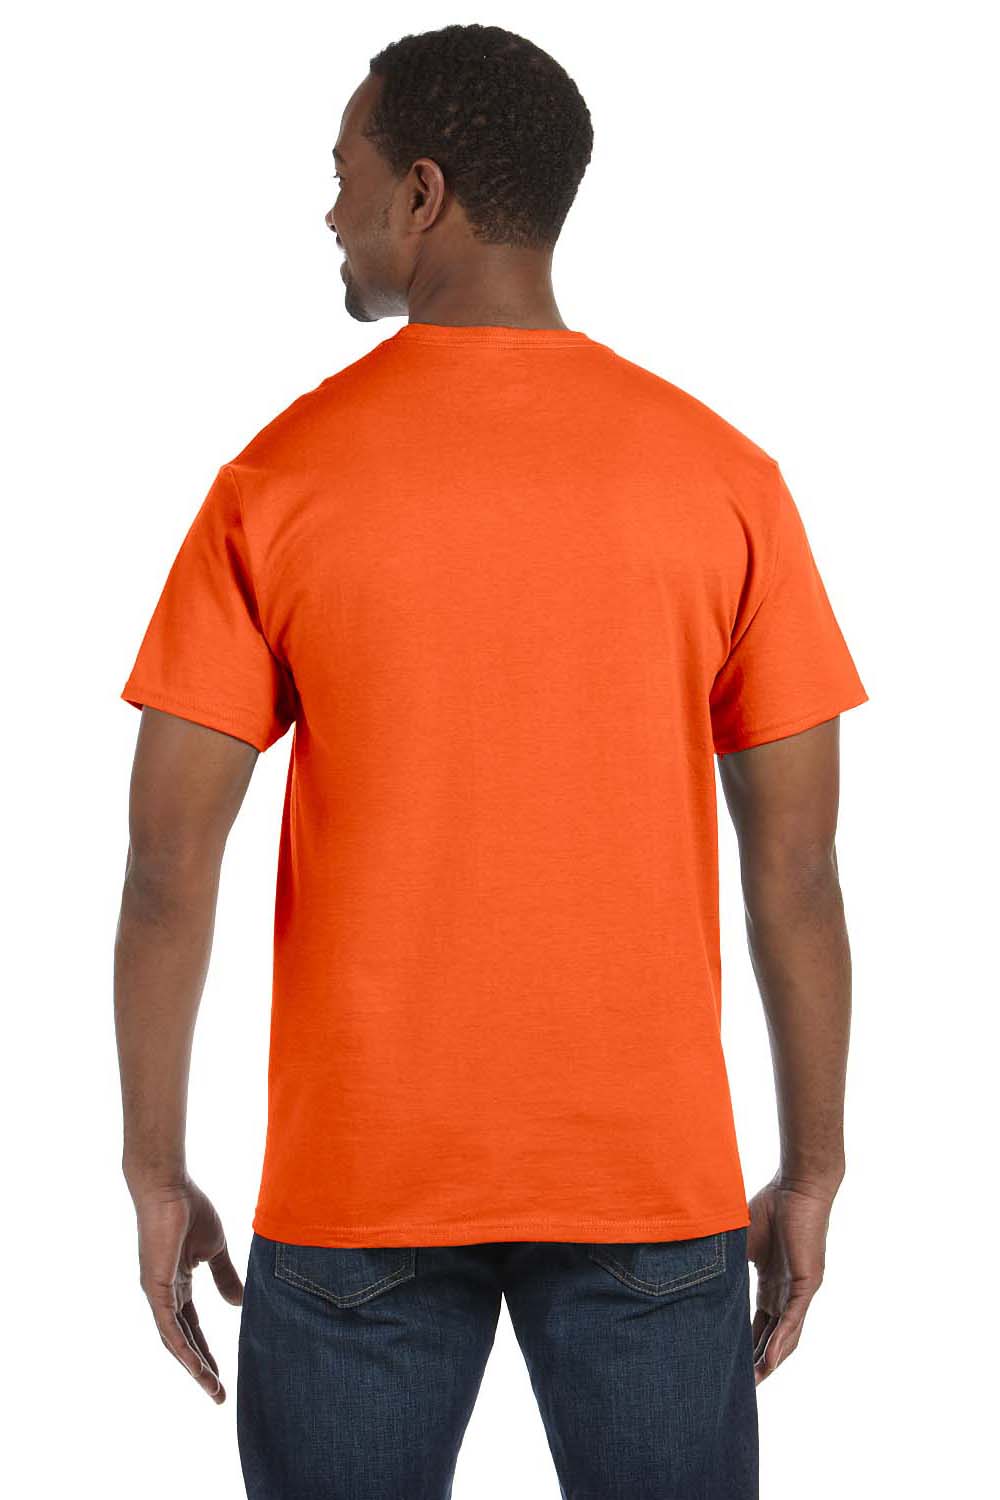 Jerzees 29M/29MR/29MT Mens Safety Orange Sleeve — Moisture Dri-Power T-Shirt Crewneck Short Wicking